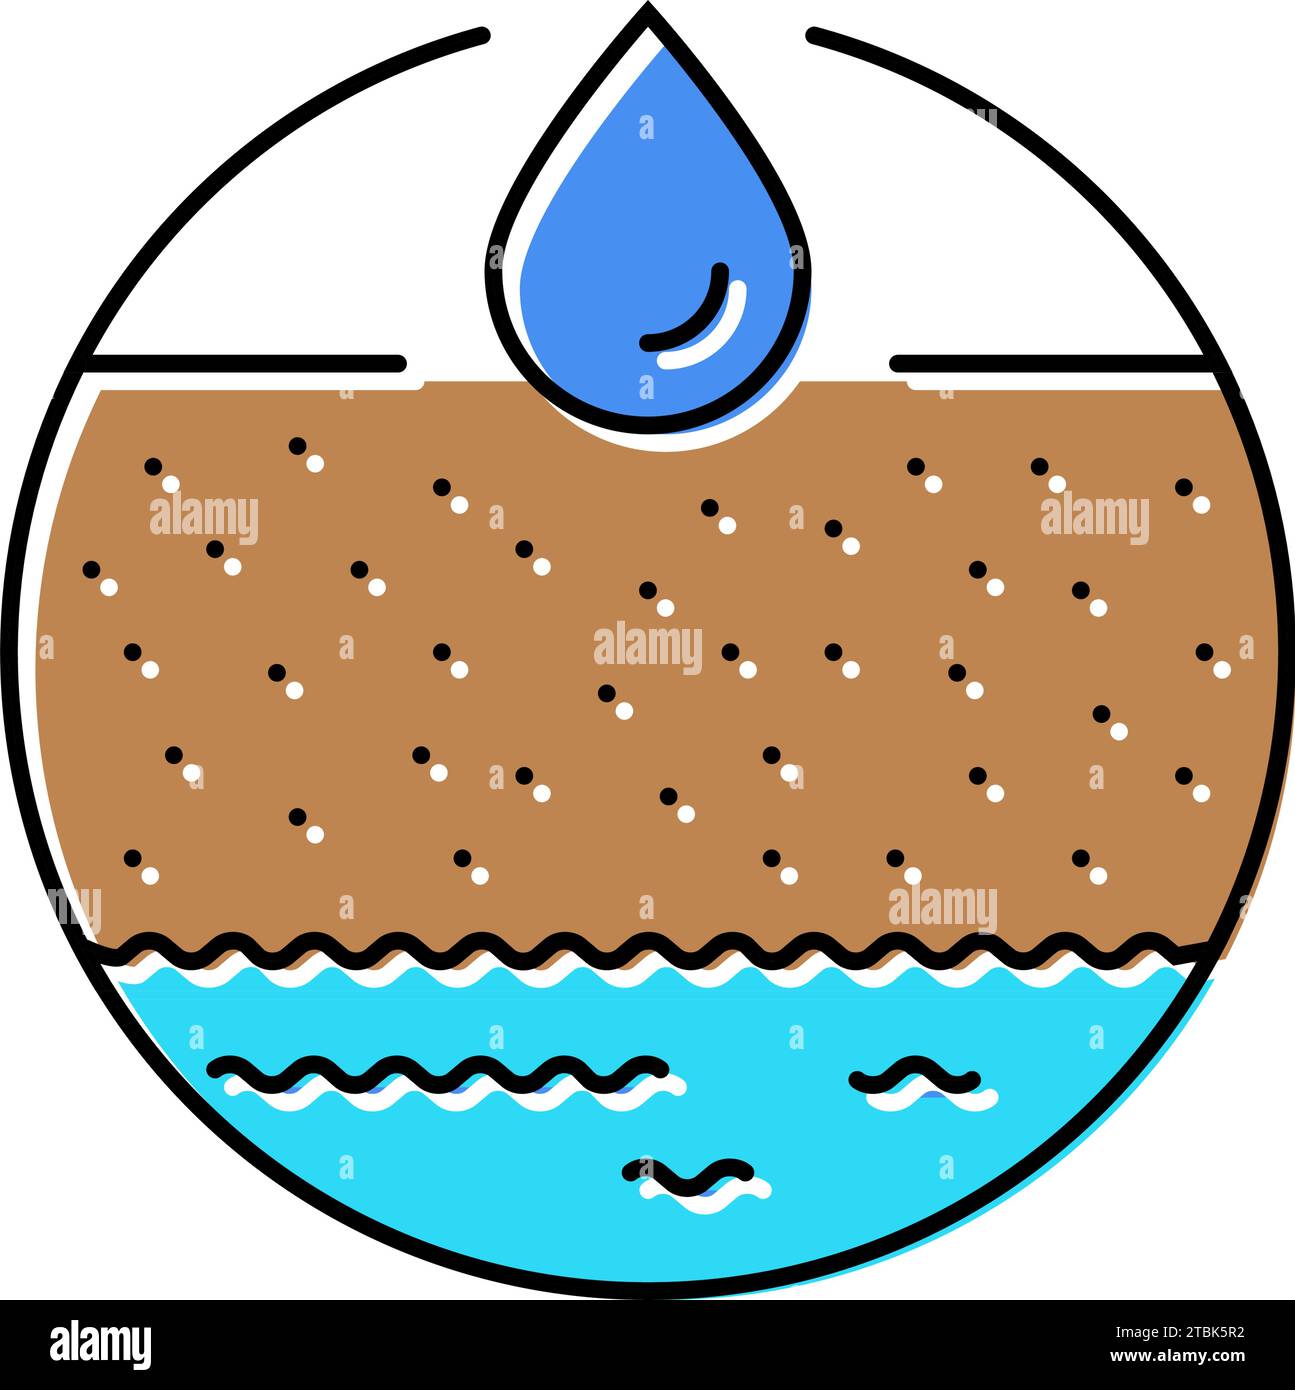 Grundwasserleiteranalyse Hydrogeologe Farbe Symbol Vektor Illustration Stock Vektor